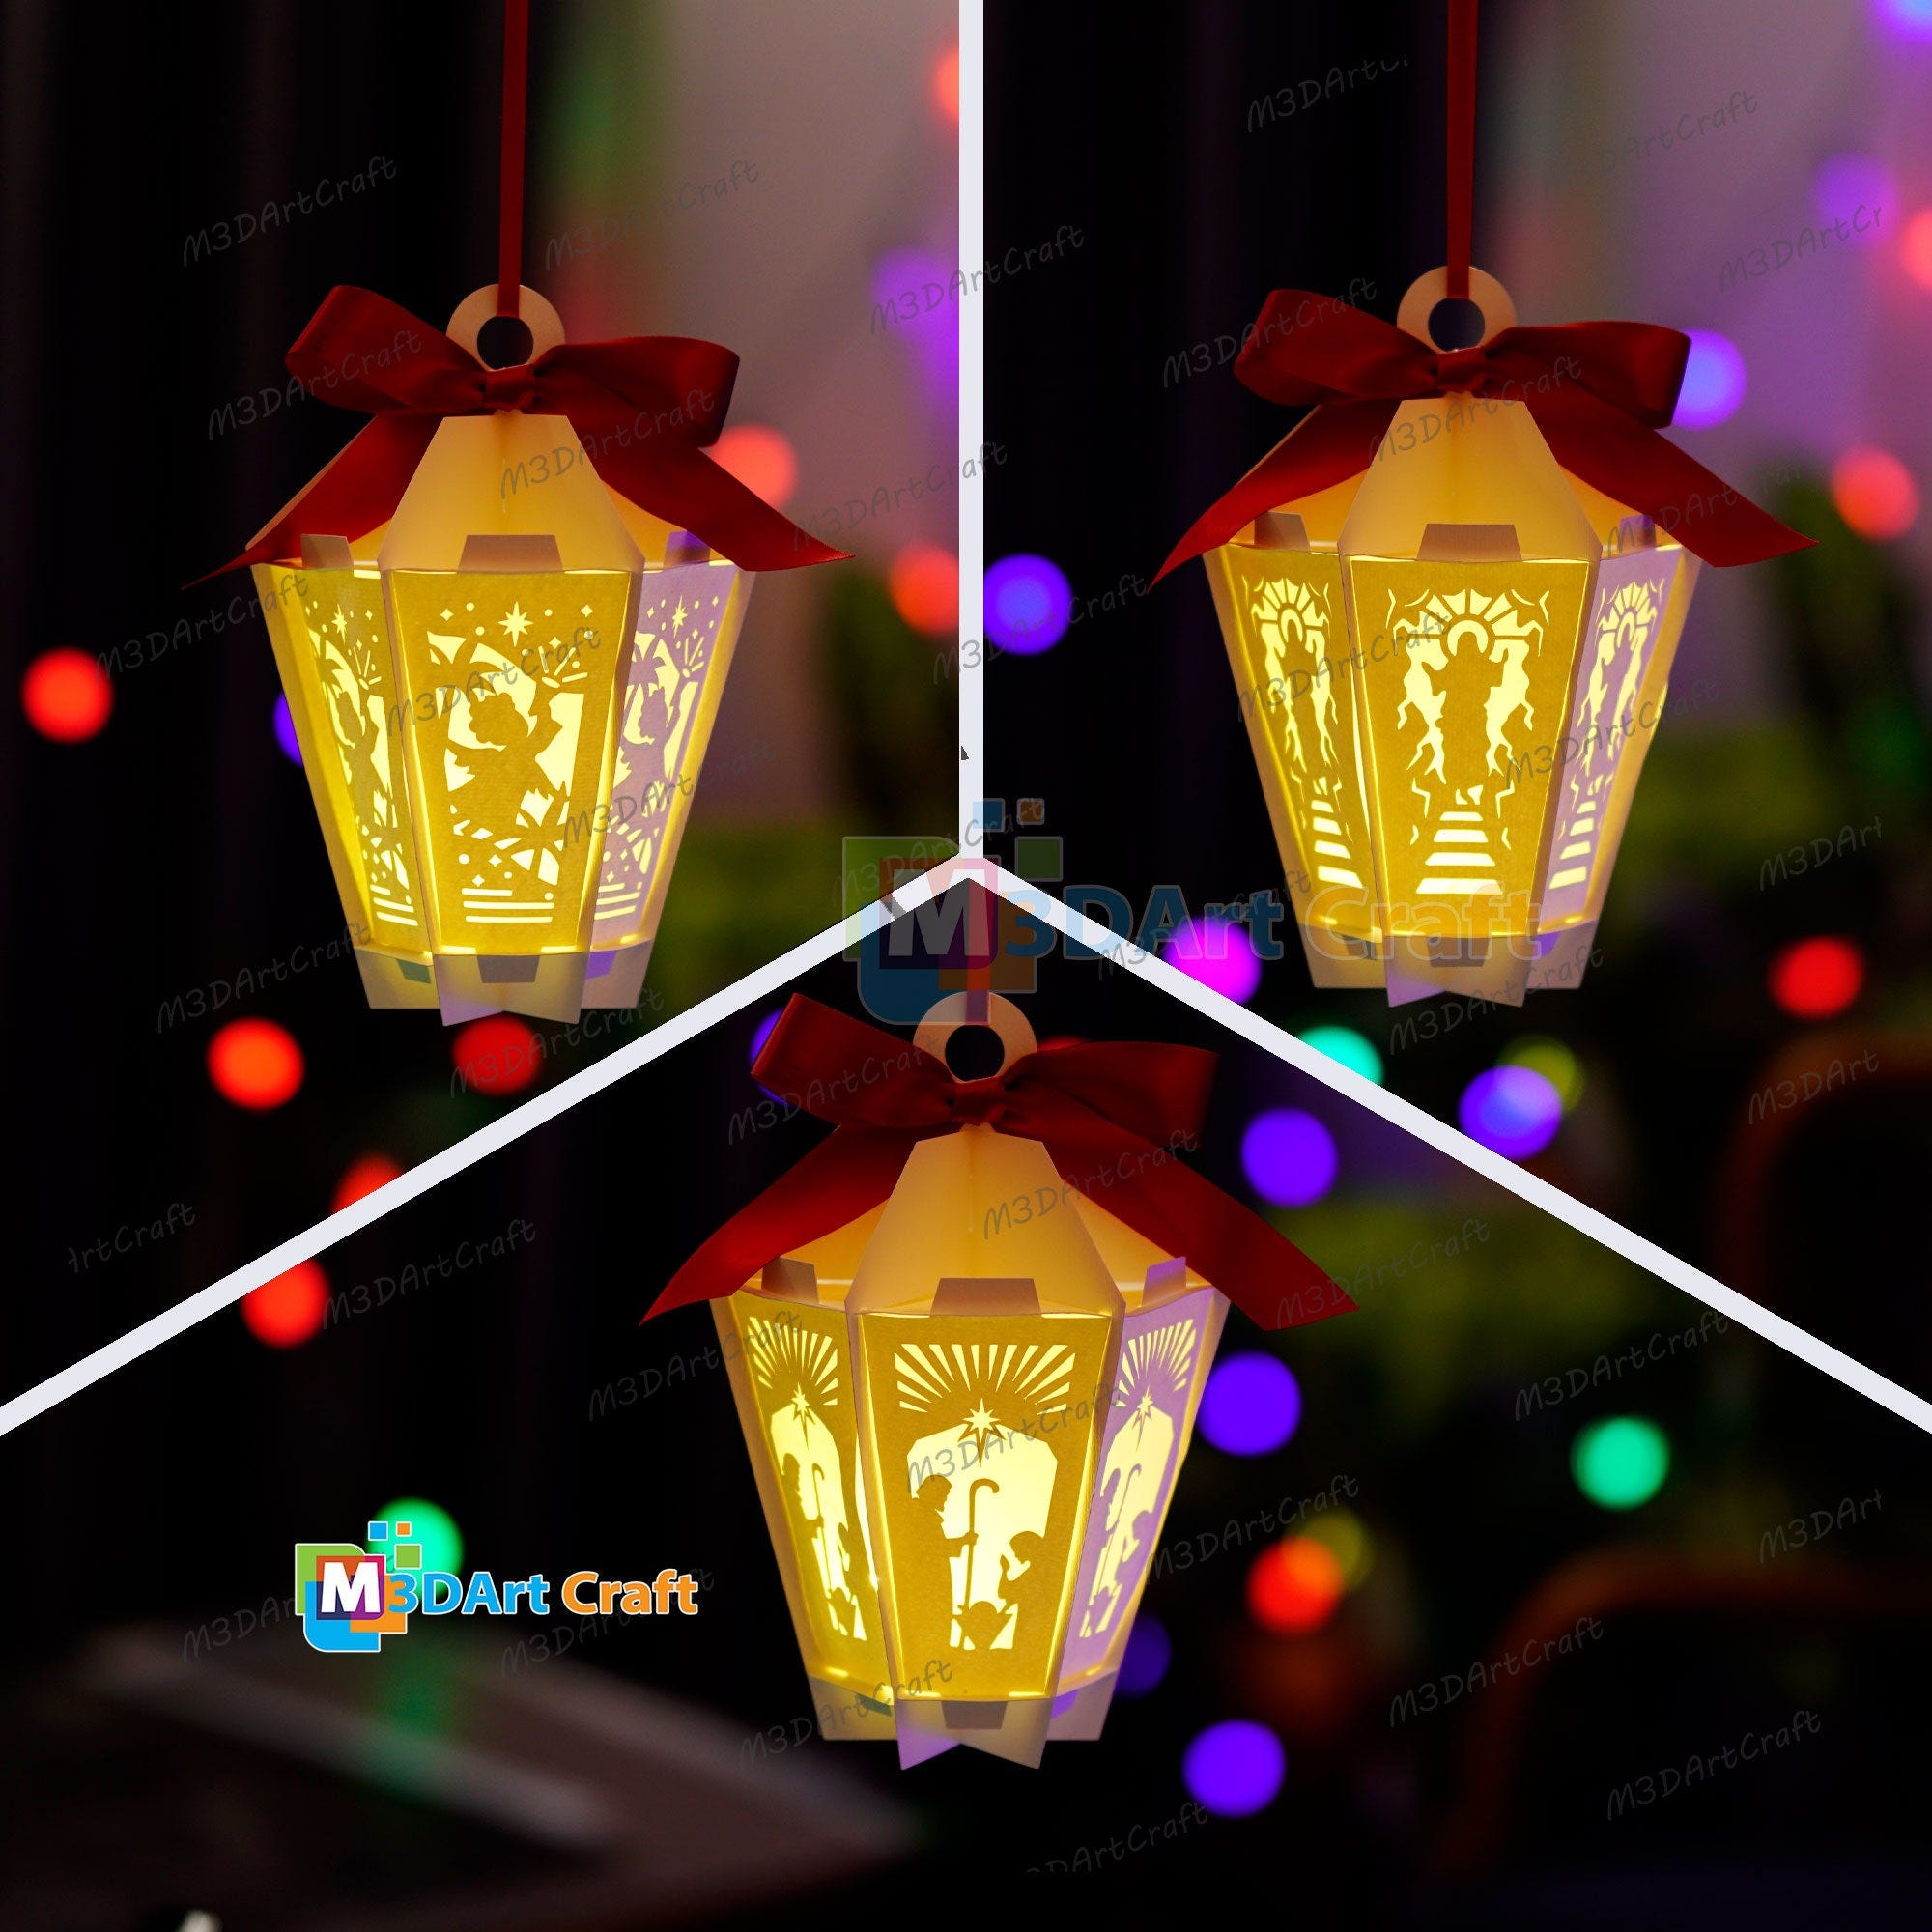 Pack 3 Nativity Scene Hexagona Lantern Hanging SVG Template For Christmas Tree Decorations - DIY Christmas Ornaments - Christmas Paper Cut